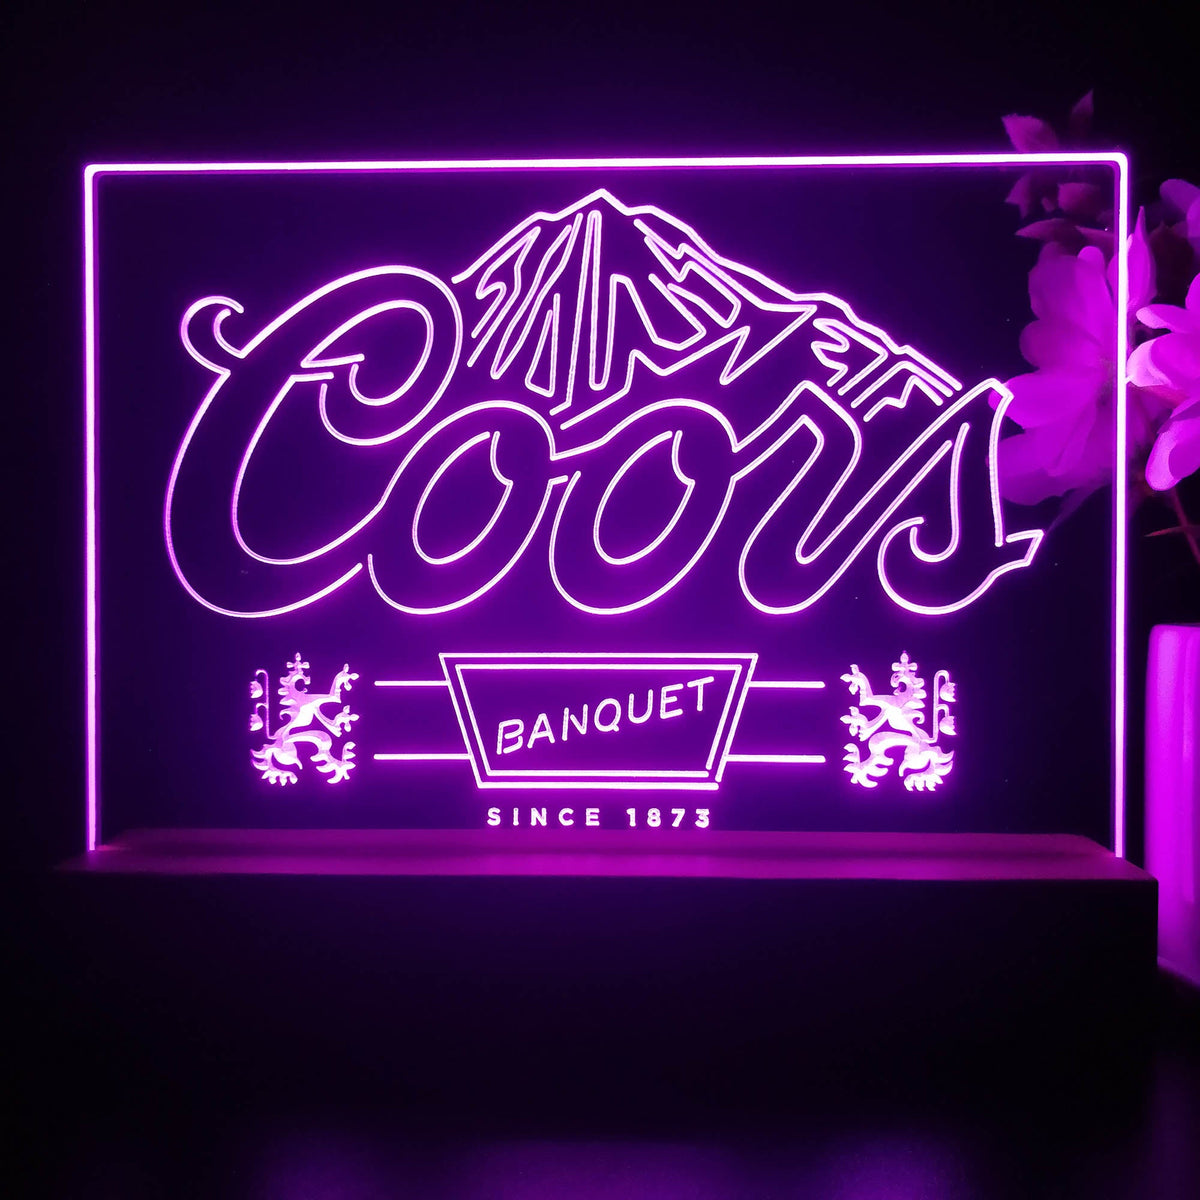 Coors Banquet Neon Pub Bar Sign LED Lamp